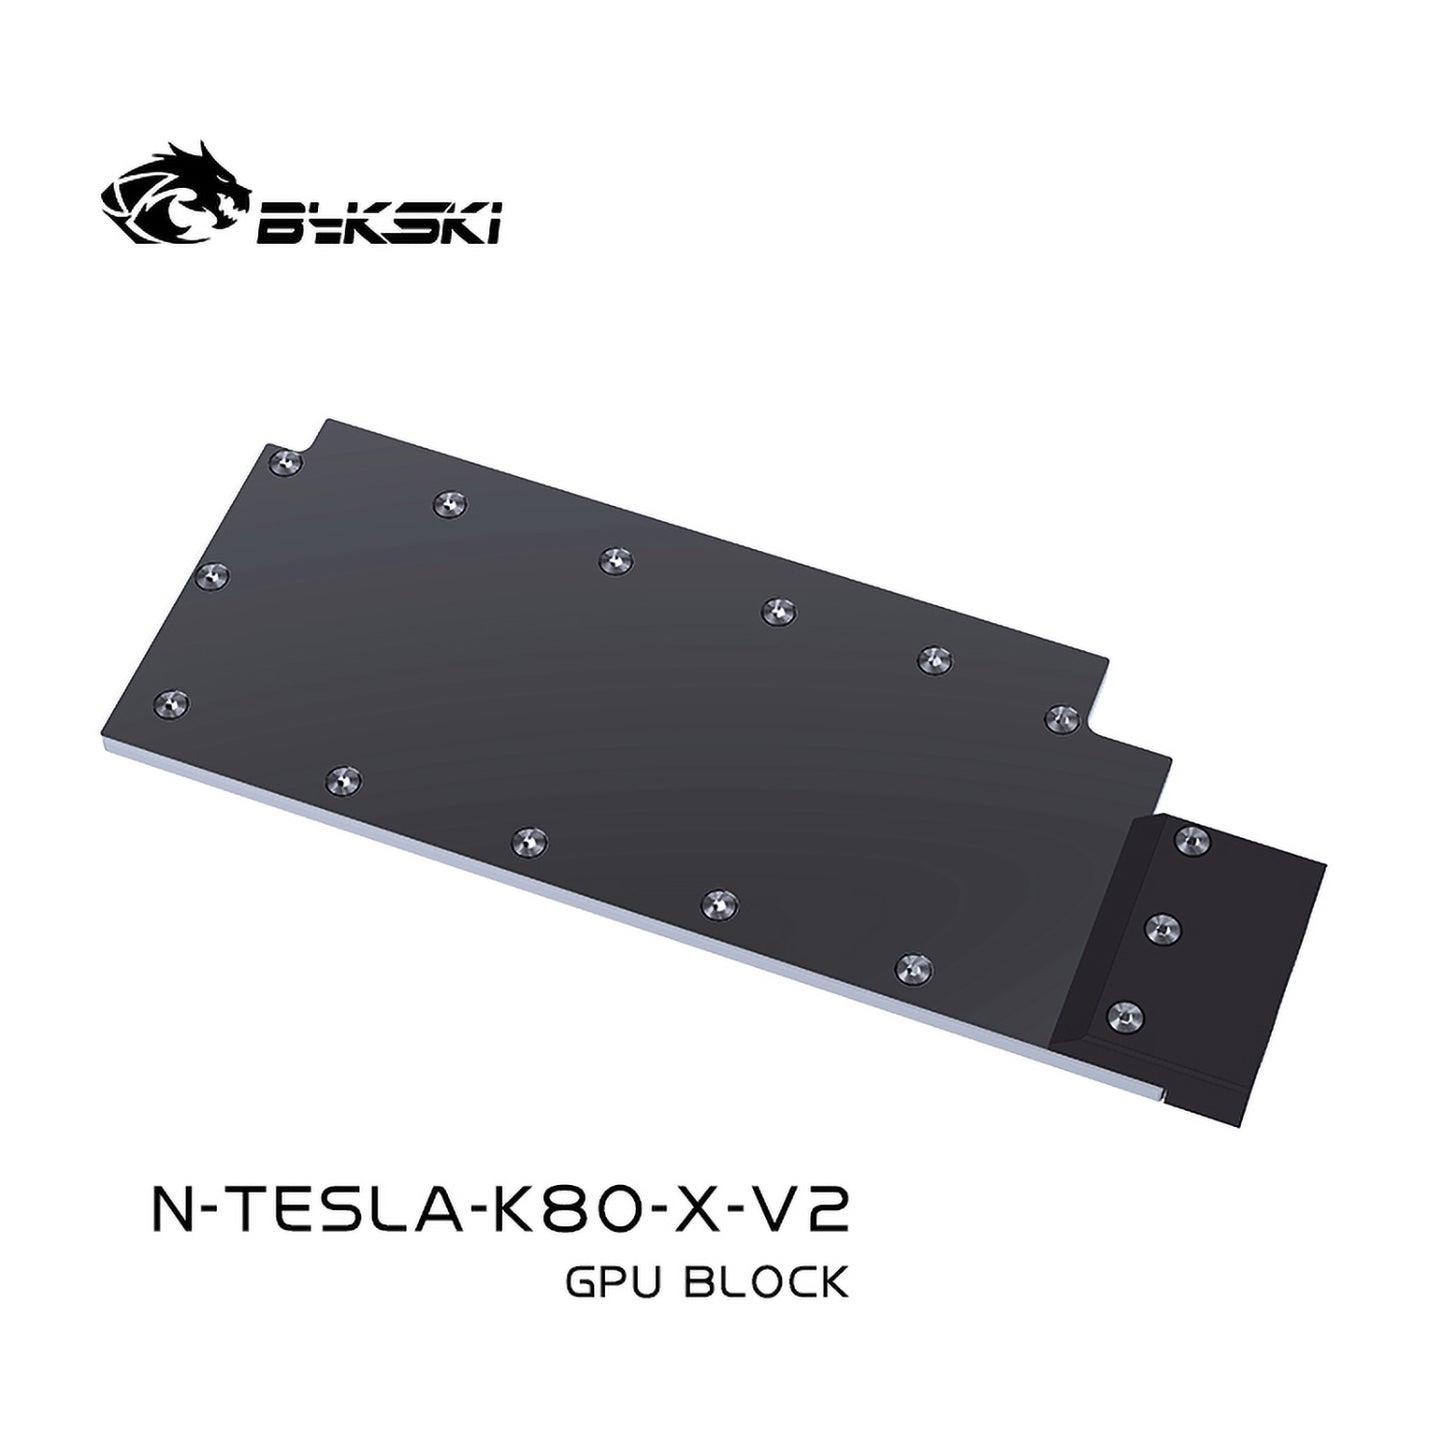 Bykski GPU Block For Leadtek Tesla K80M, High Heat Resistance Material POM + Full Metal Construction, Full Cover GPU Water Cooling Cooler Radiator Block N-TESLA-K80-X-V2